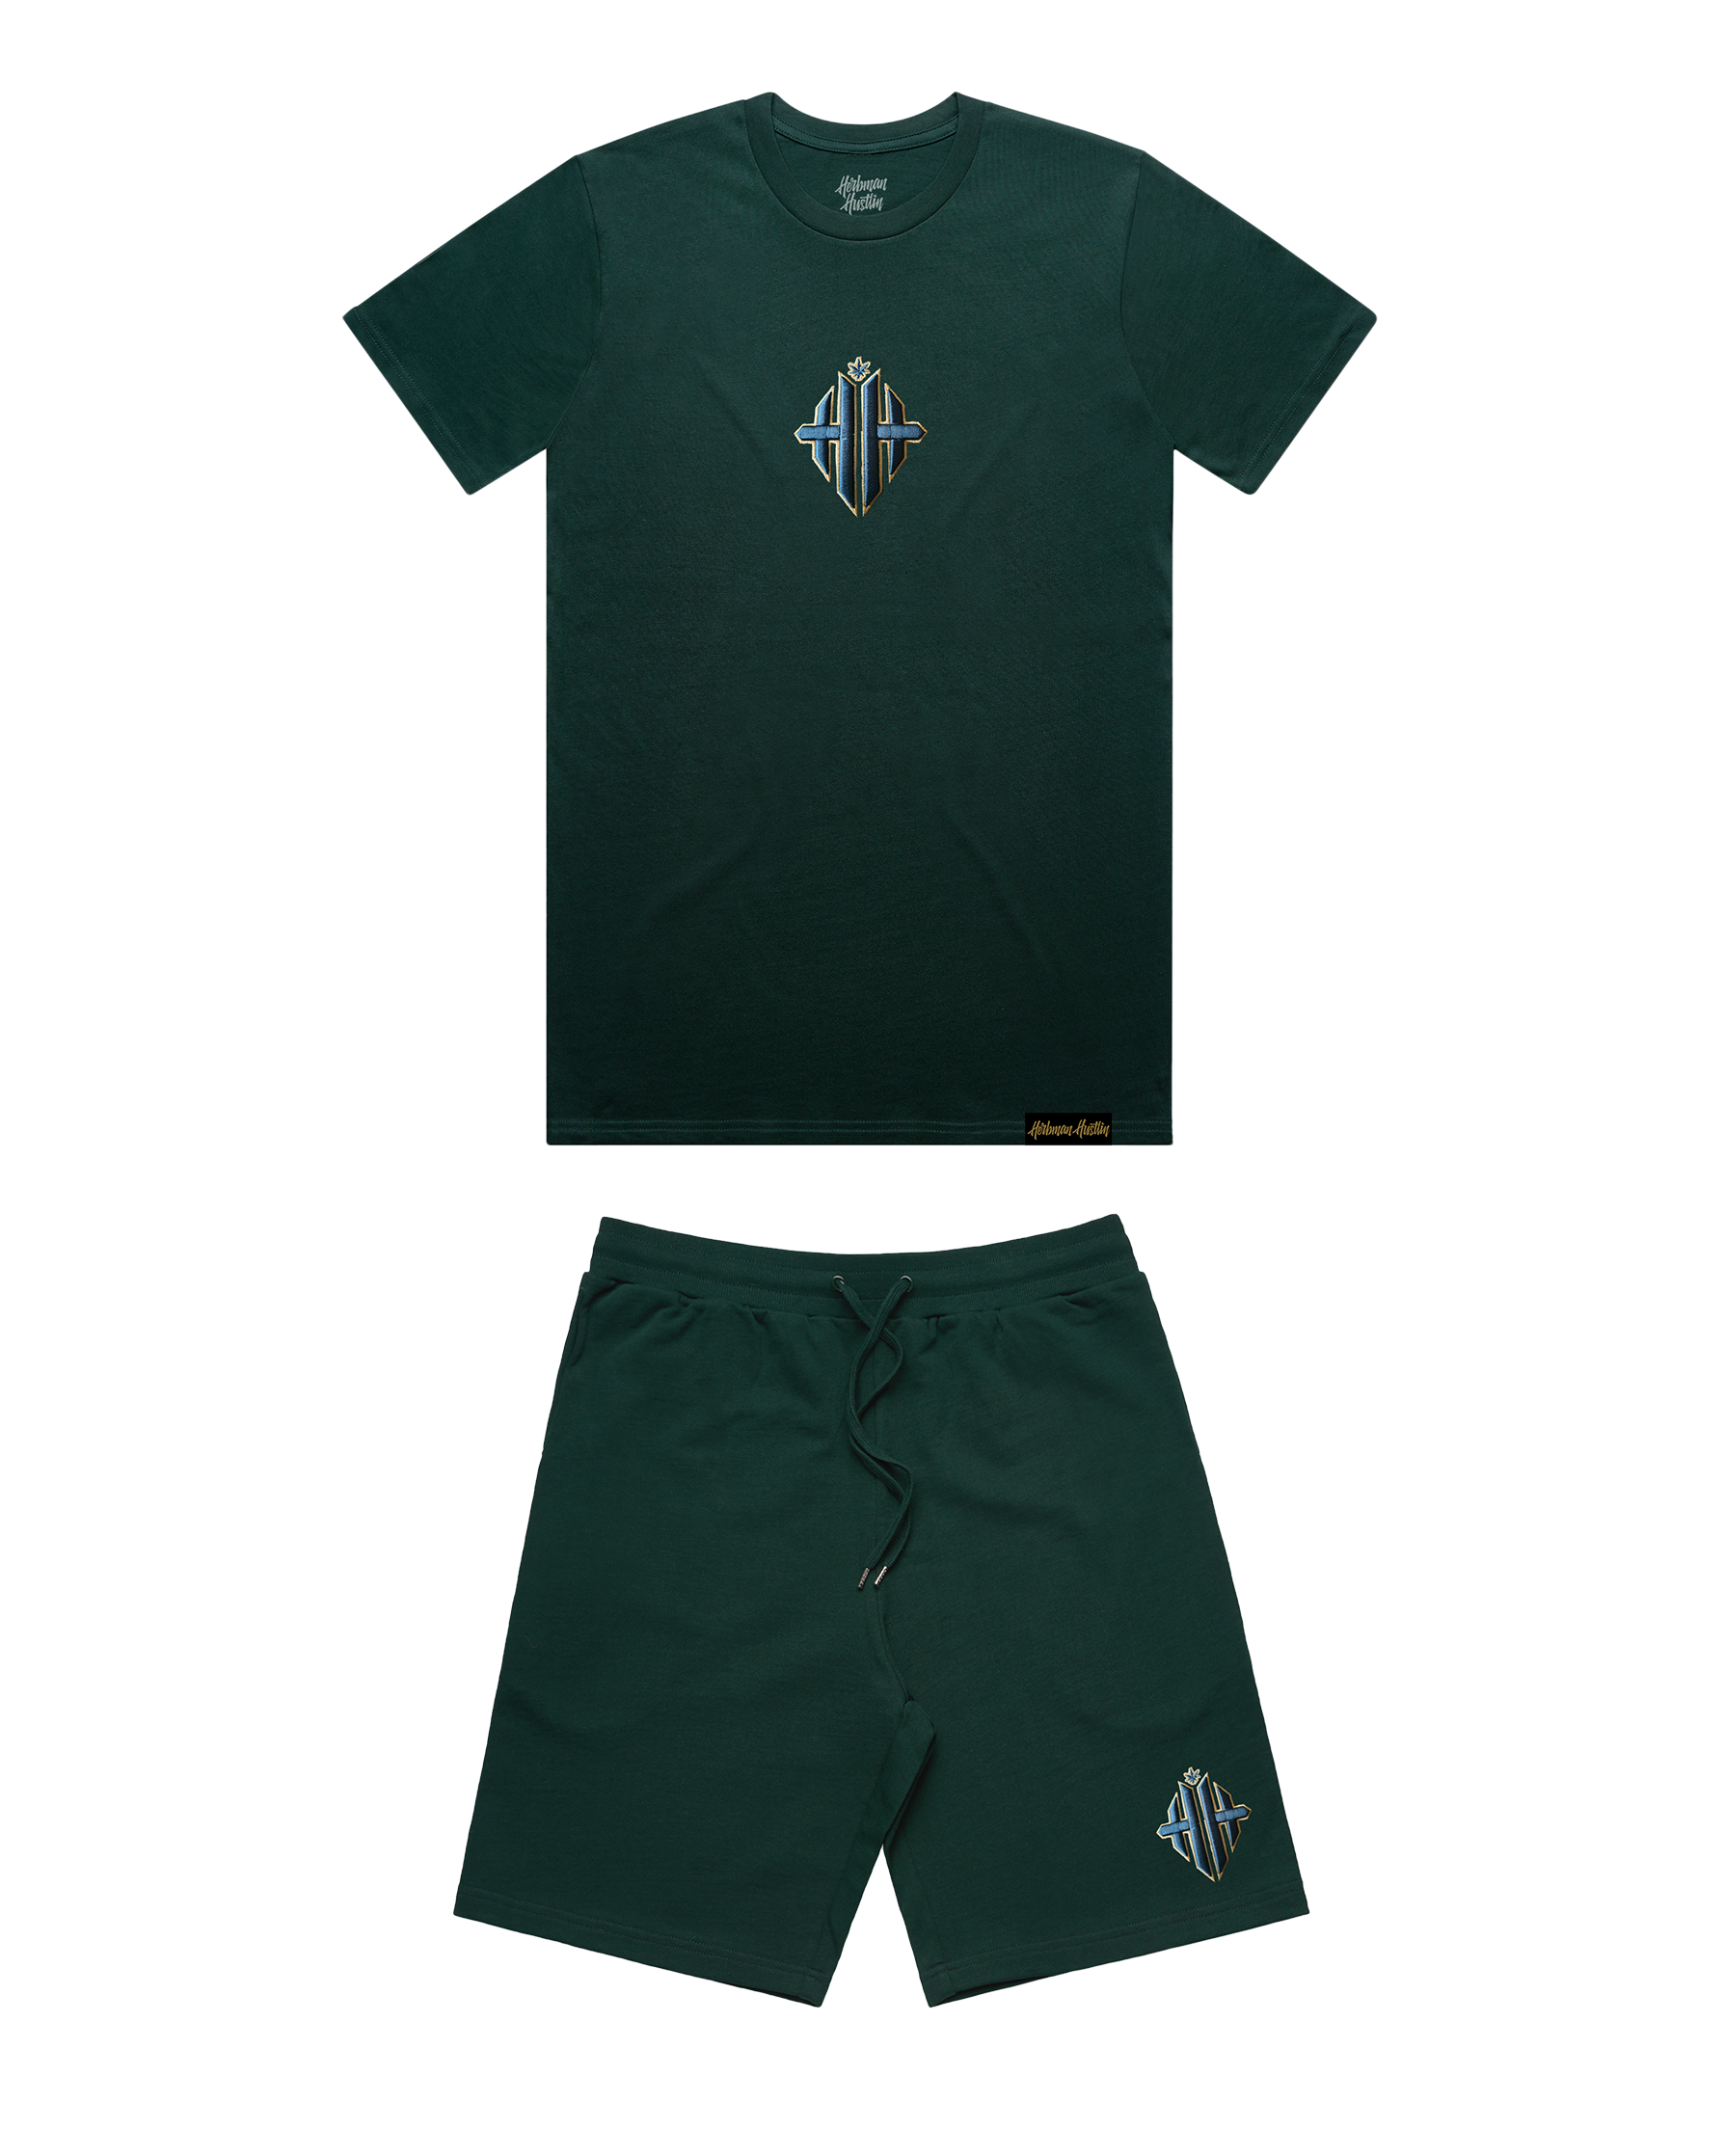 Emerald Embroidered Monogram Shorts Set - Green/Gold